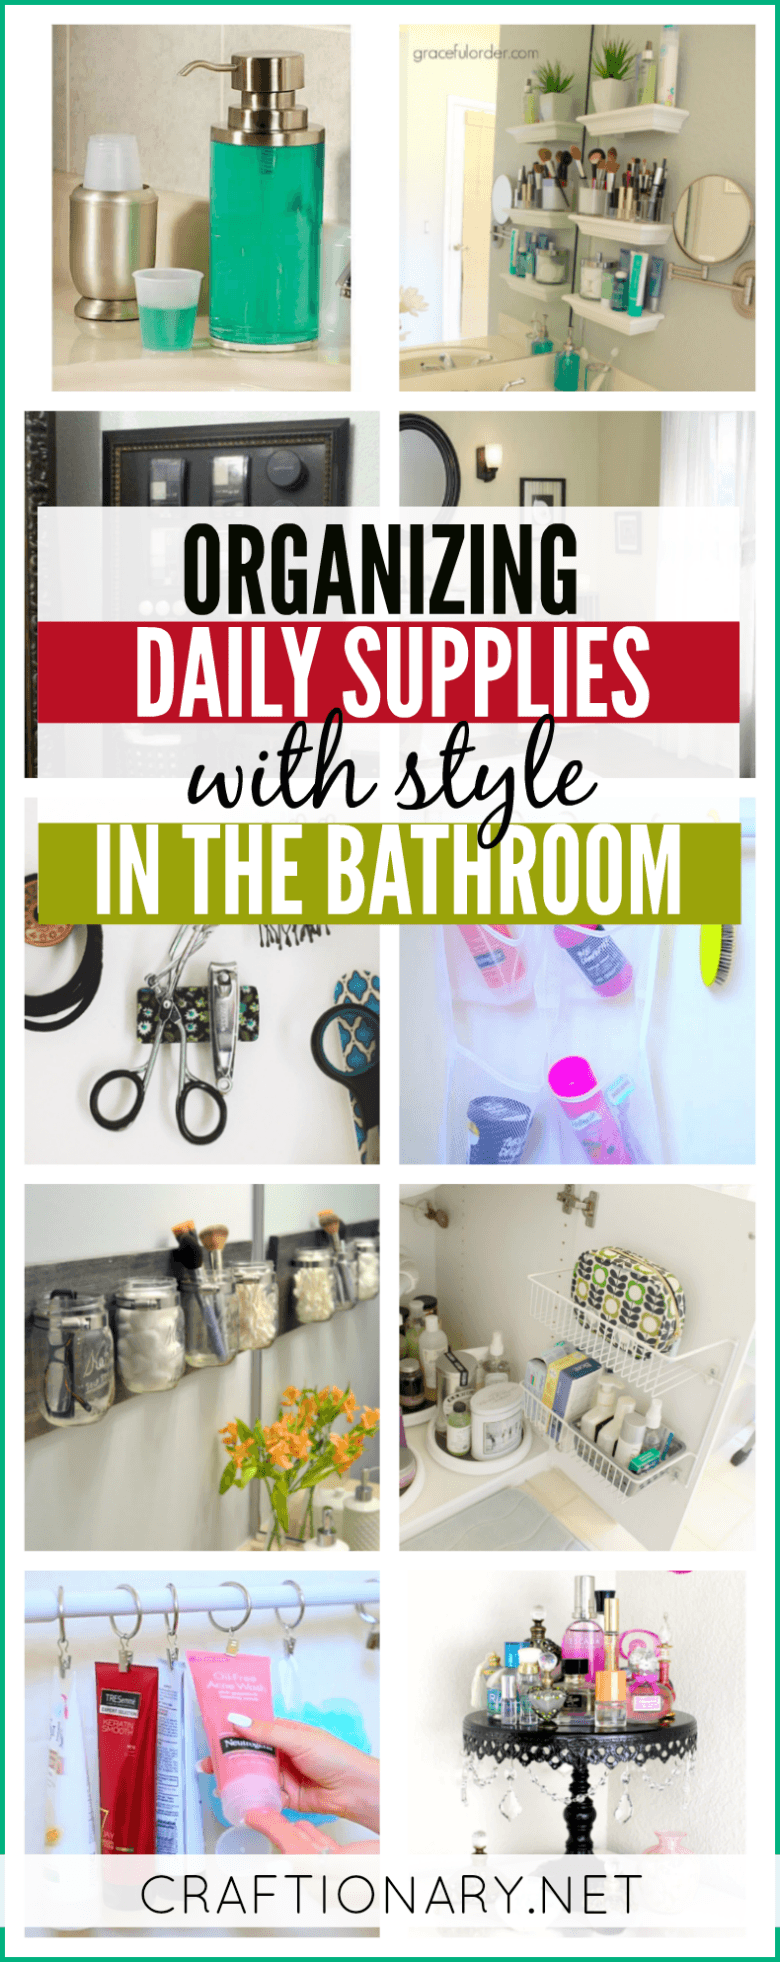 20 Bathroom organization ideas for daily essentials and items - Craftionary